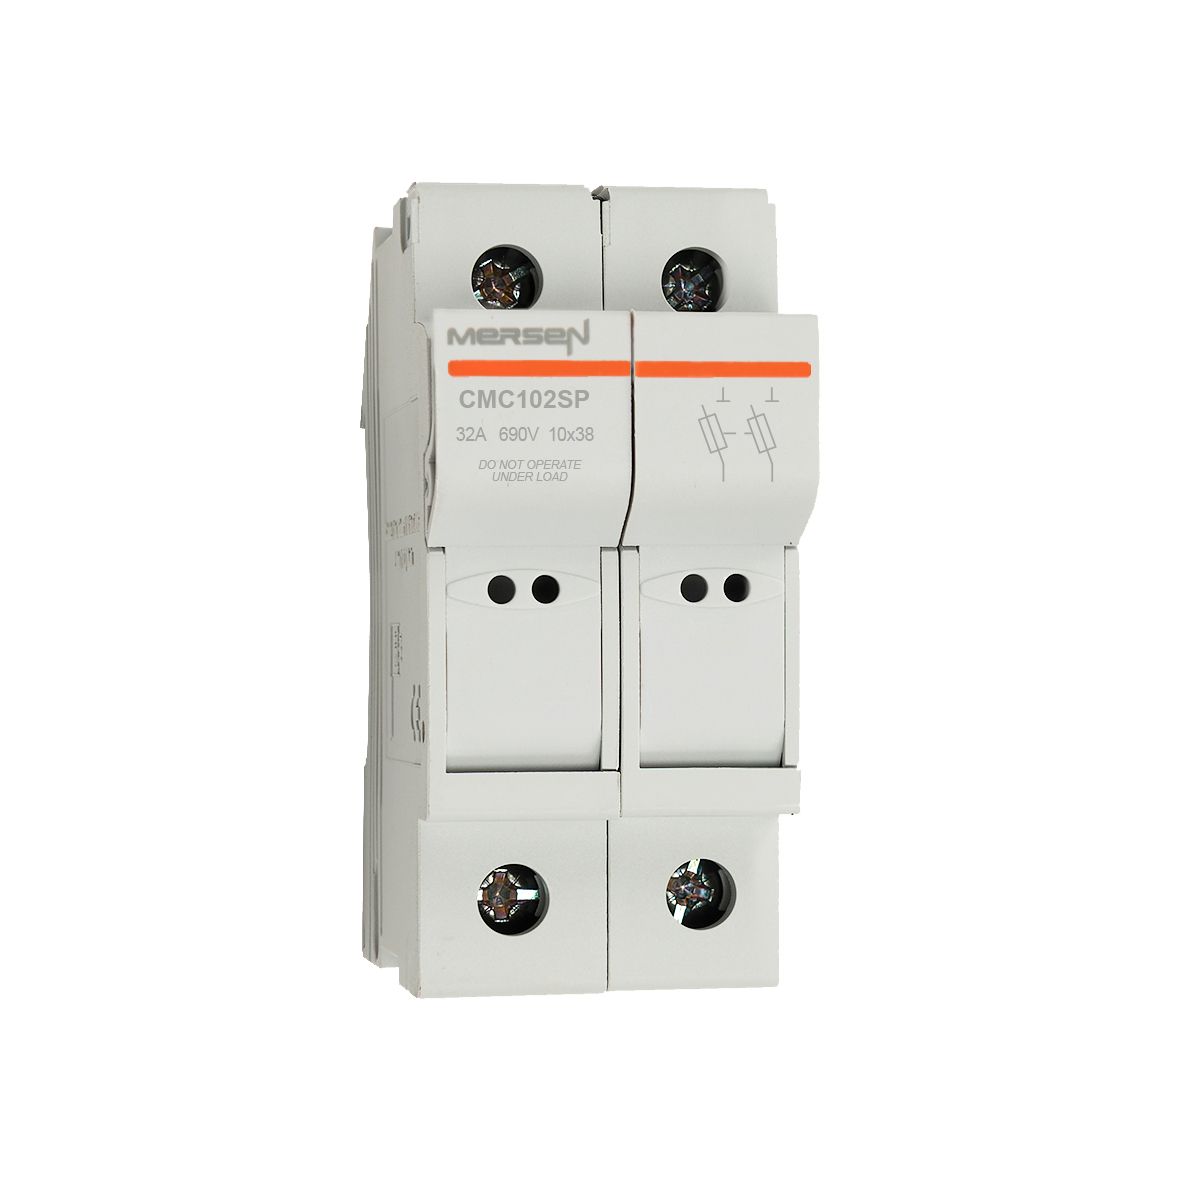 A1062761 - modular fuse holder, IEC, 2-pole, 10x38, DIN rail mounting, IP20